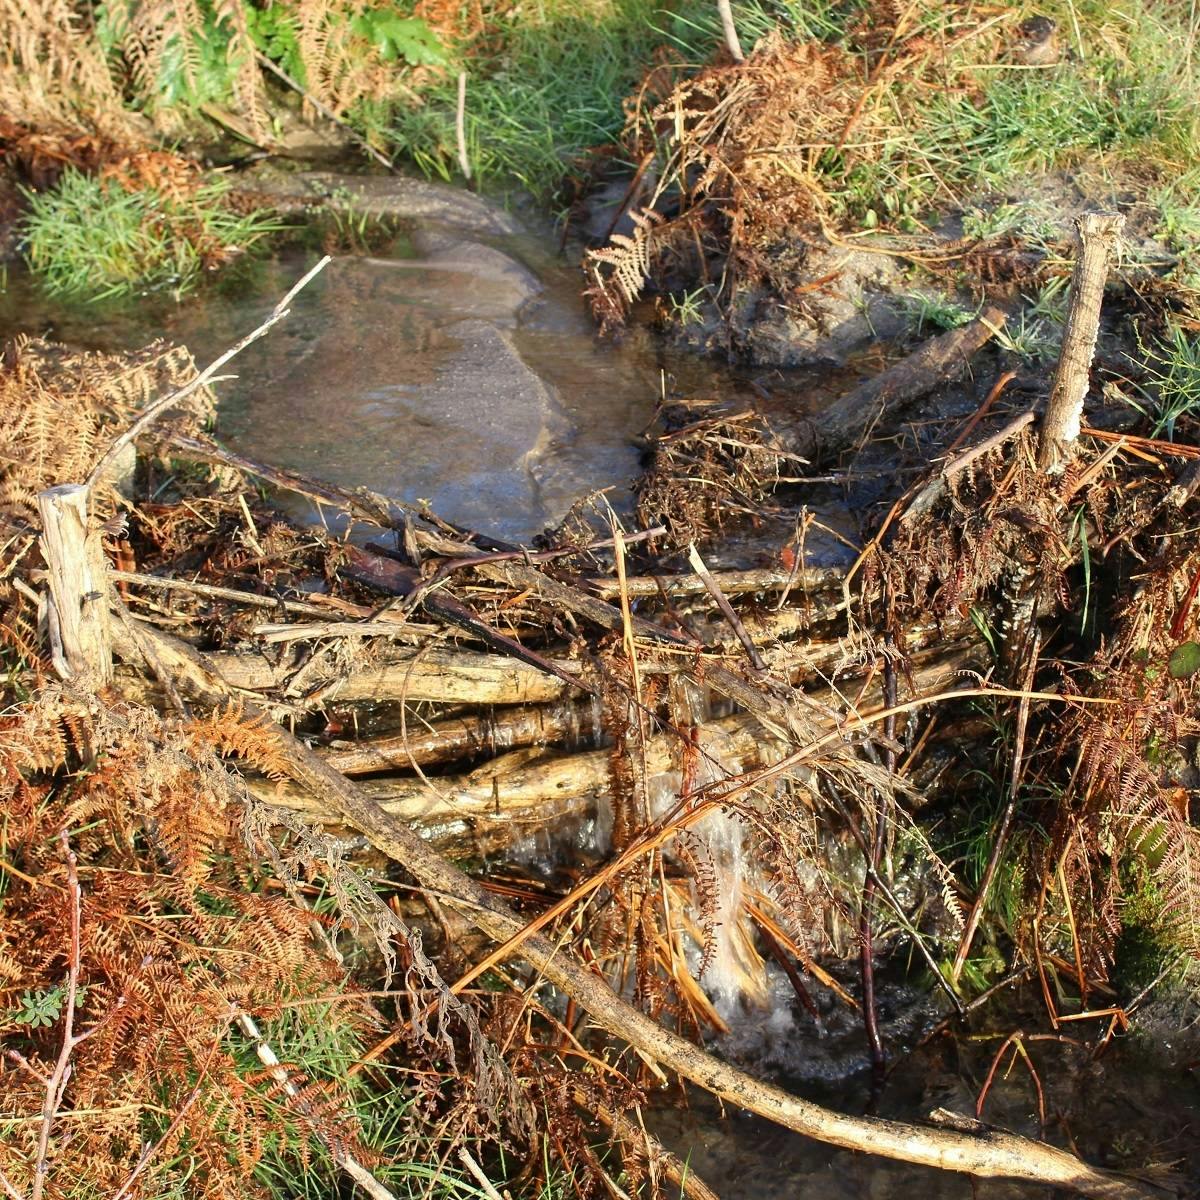 A man made dam in a stream built from fallen branches